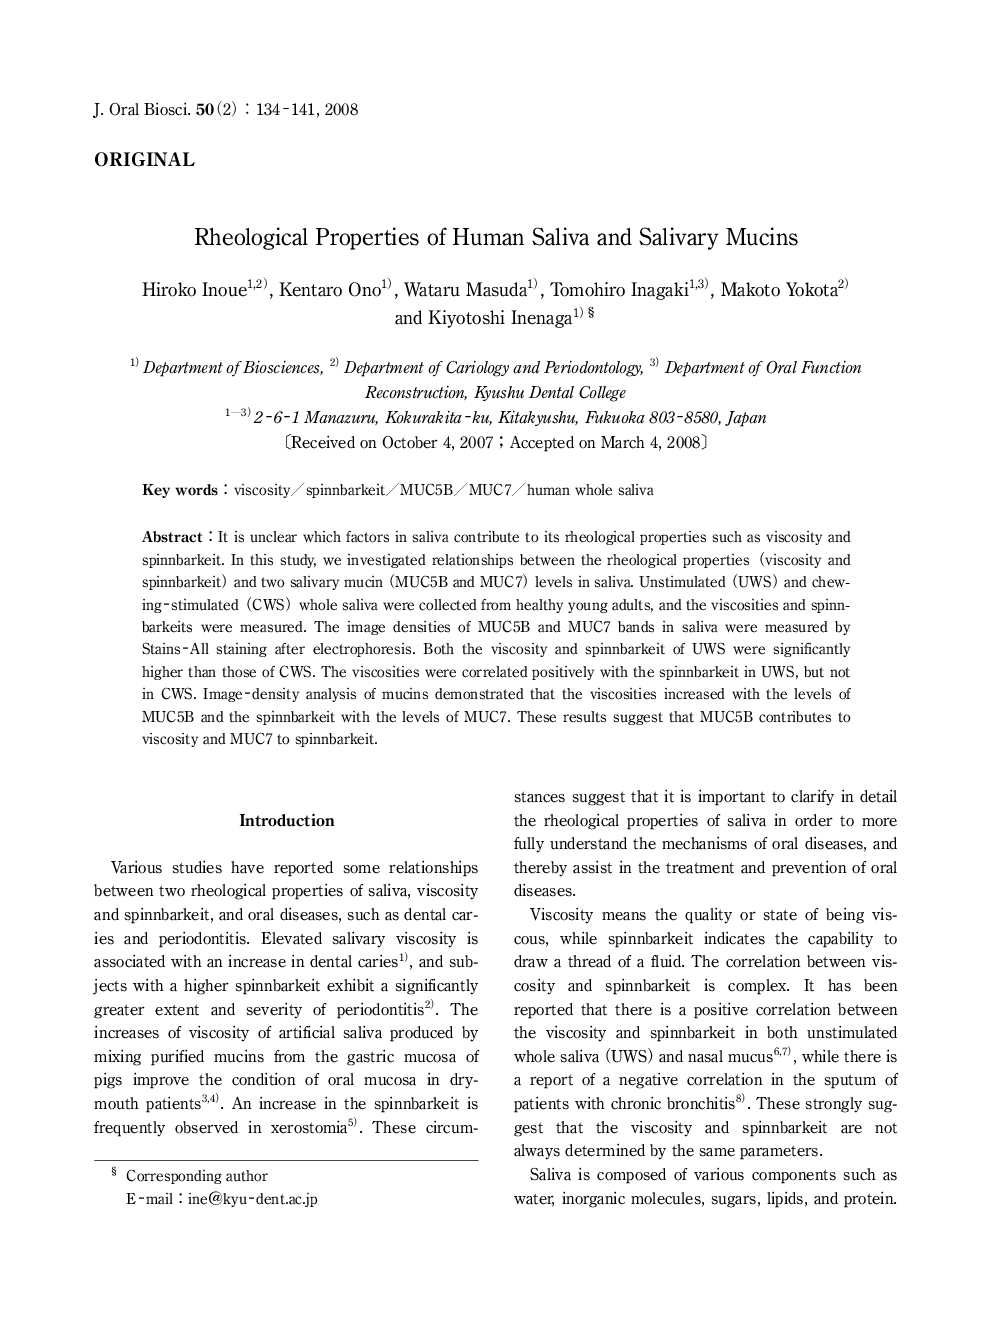 Rheological Properties of Human Saliva and Salivary Mucins